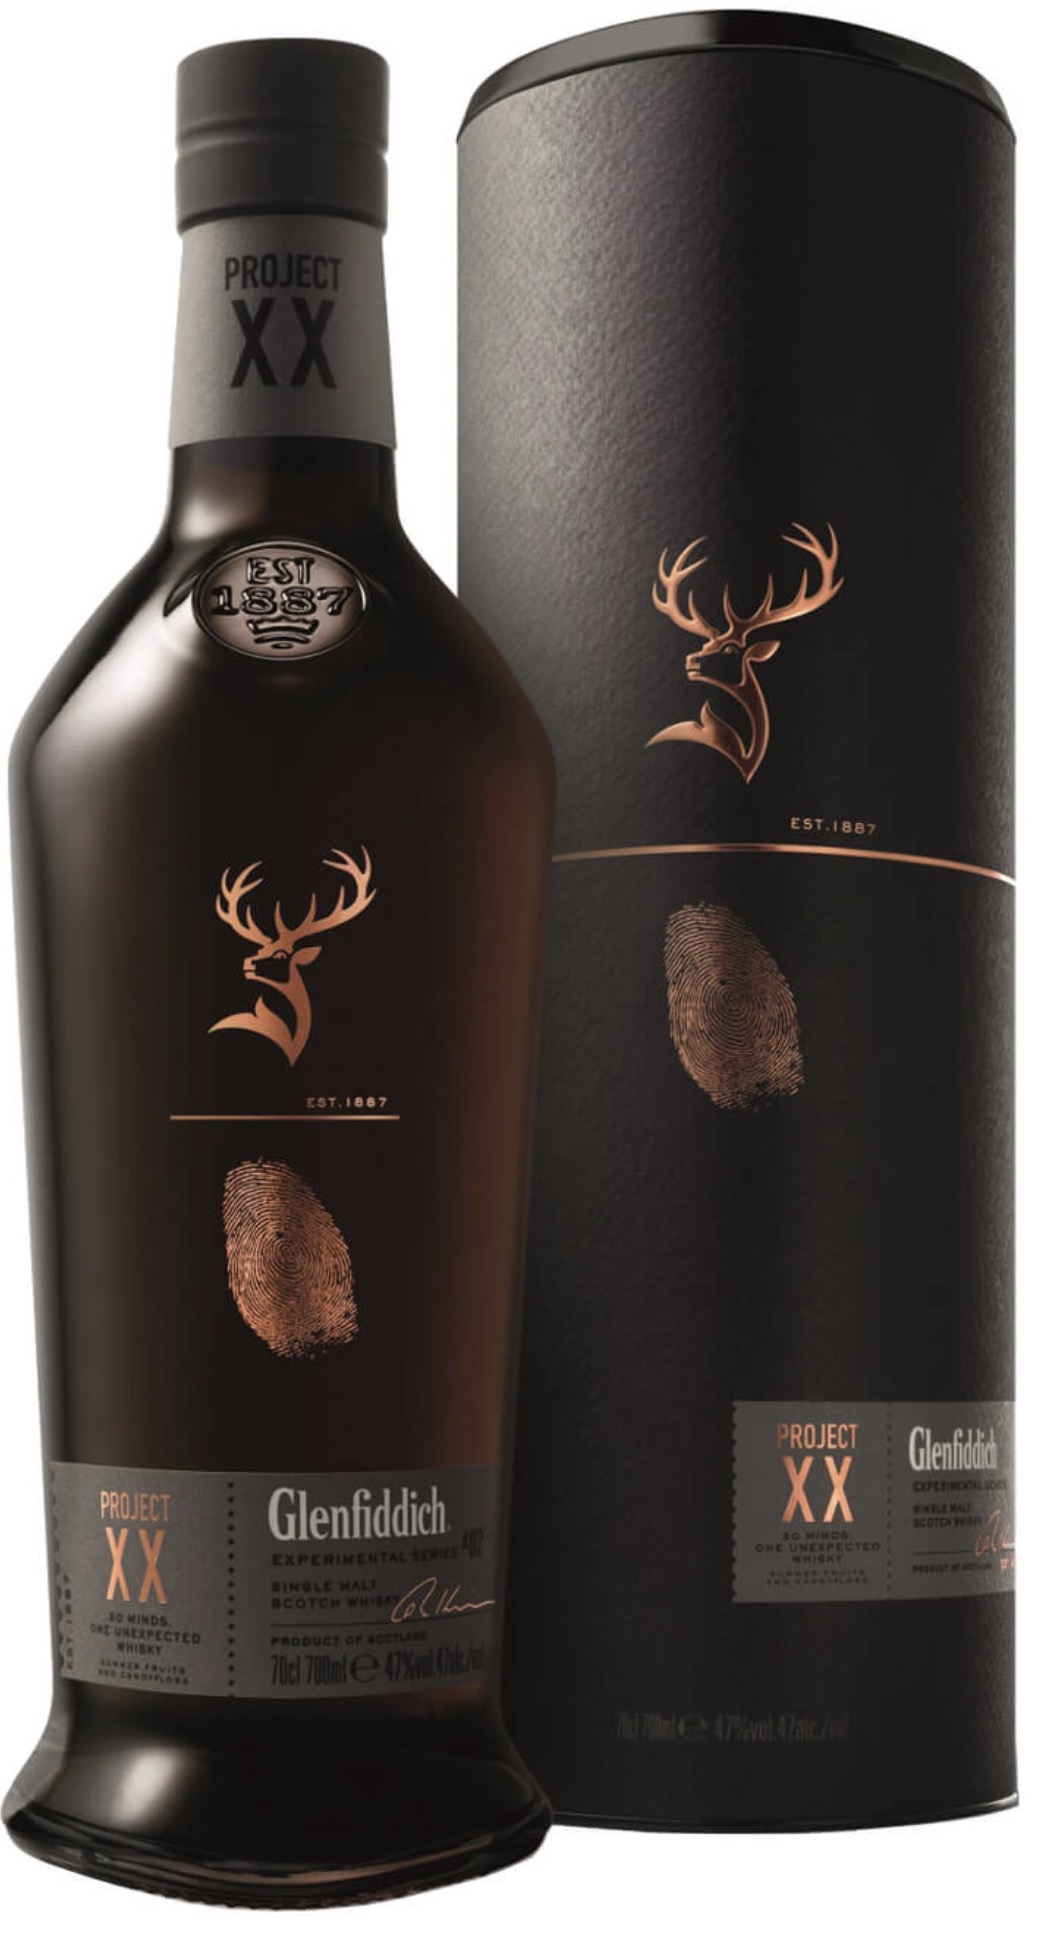 Glenfiddich Project XX Experimental Series Single Malt Scotch Whisky GP 47% 0,7l